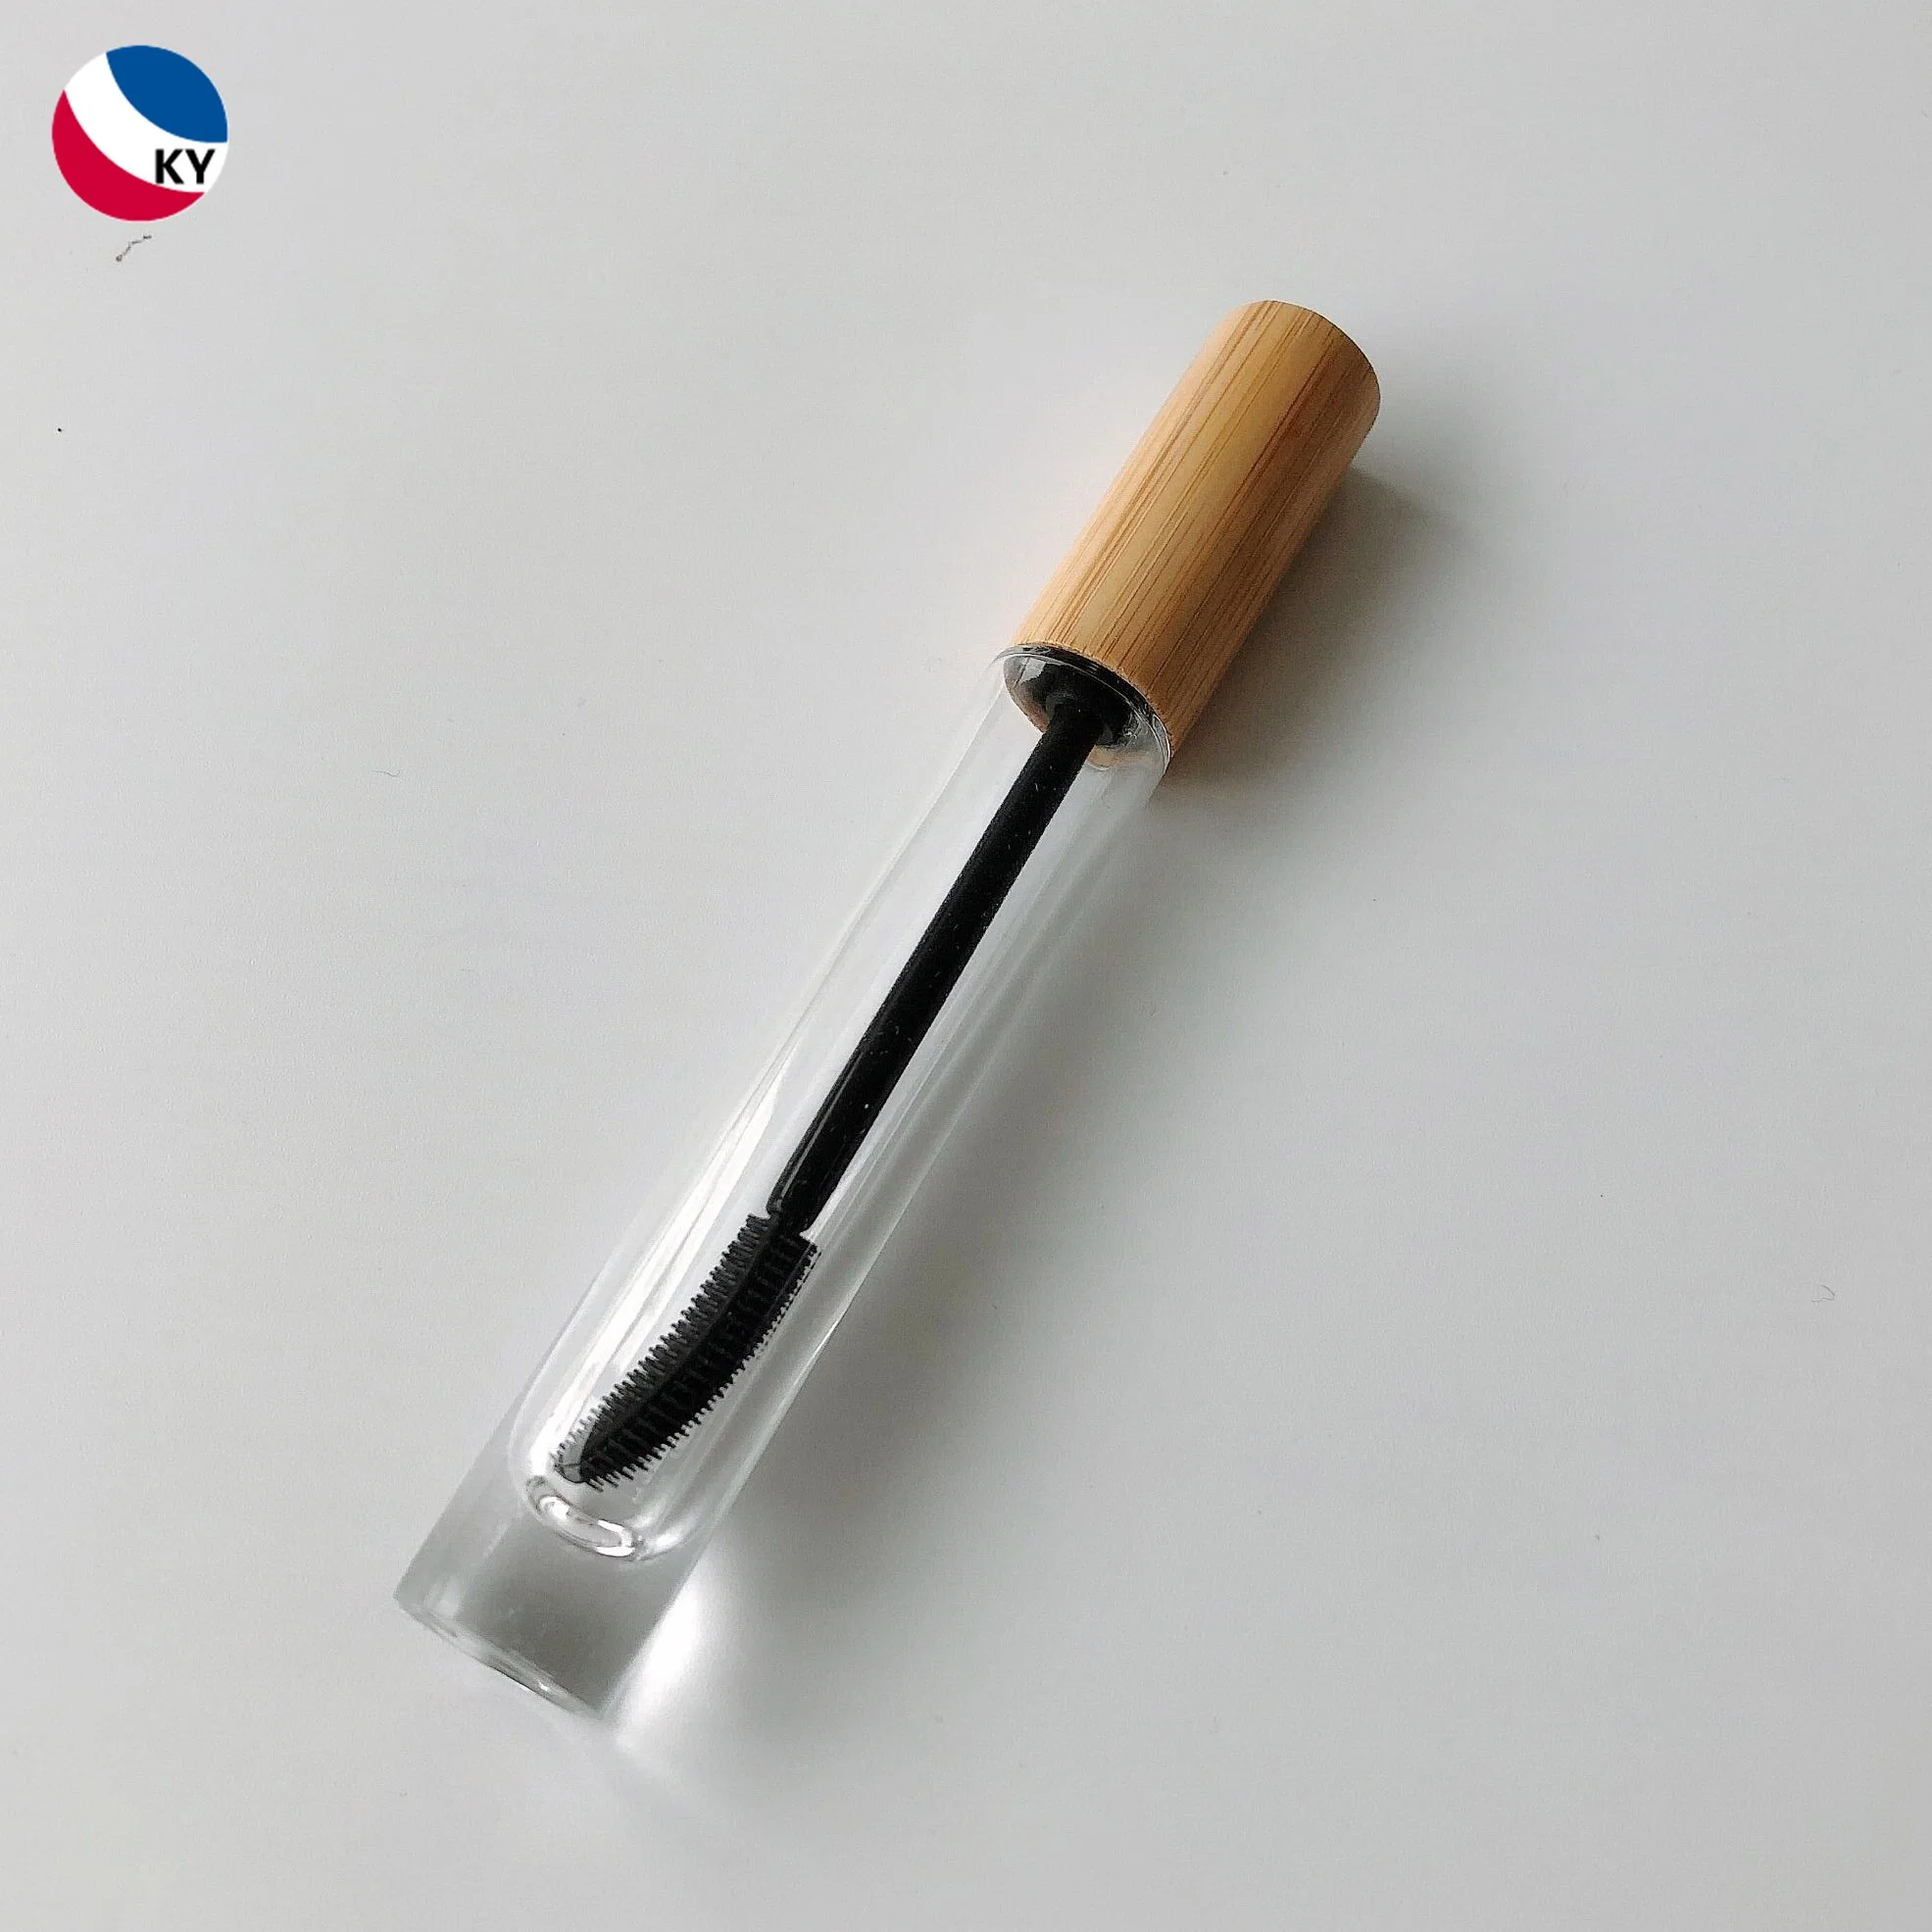 Le Mascara cils Silicone vide les tubes de bambou les tubes de verre de sérum de Mascara avec couvercle en bambou